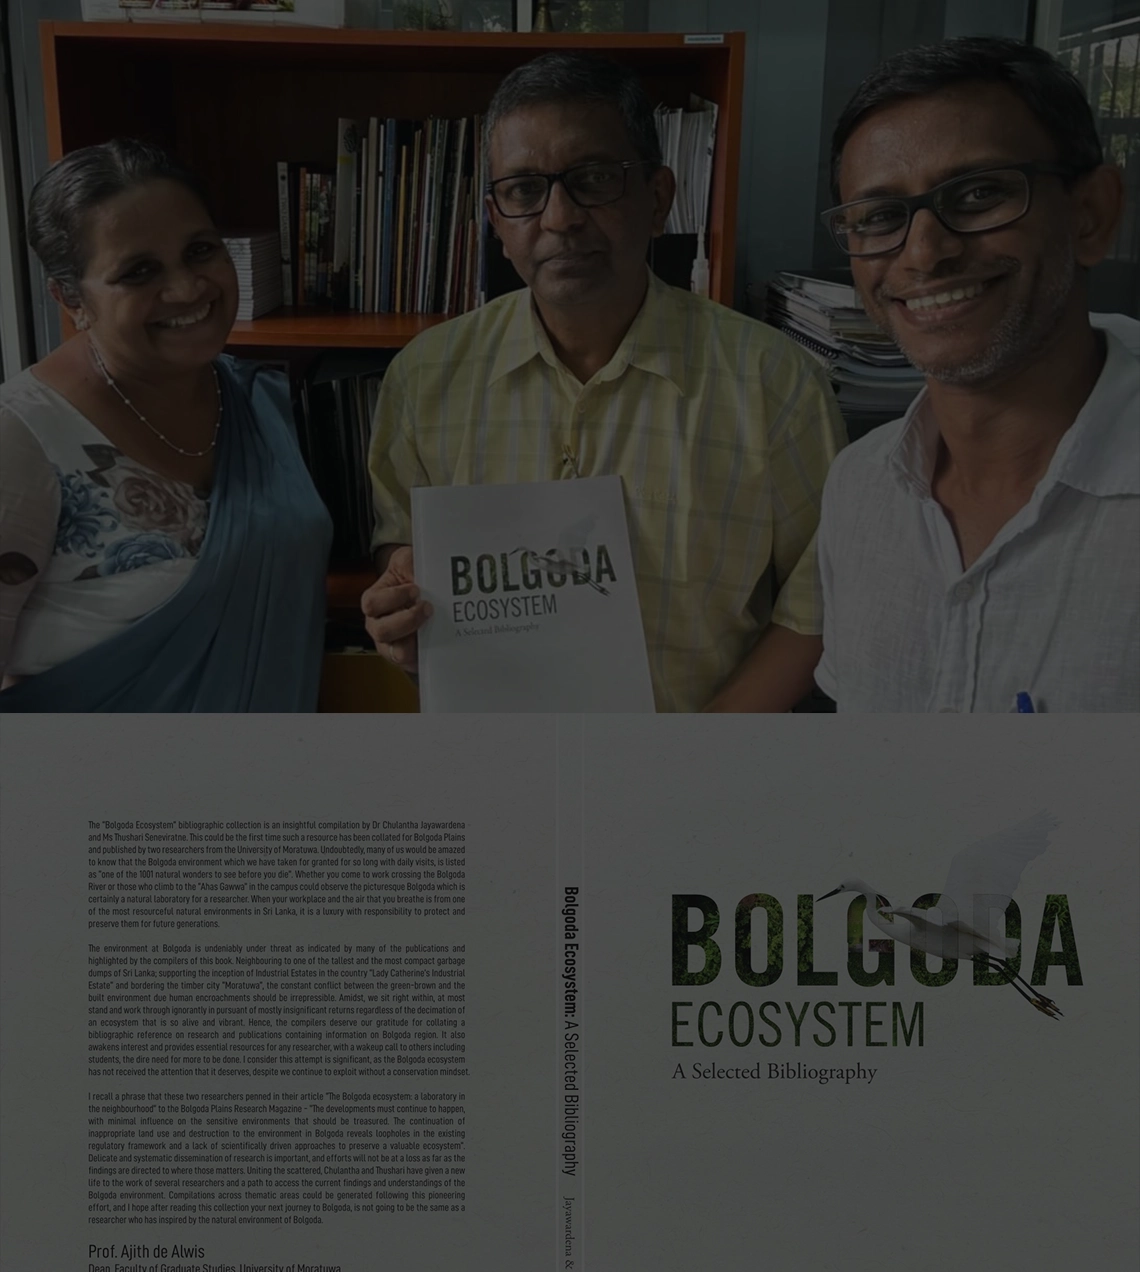 Ms. Vijita de Silva Research Award has recognized the impact of “Environmental Awareness on Bolgoda Ecosystem”